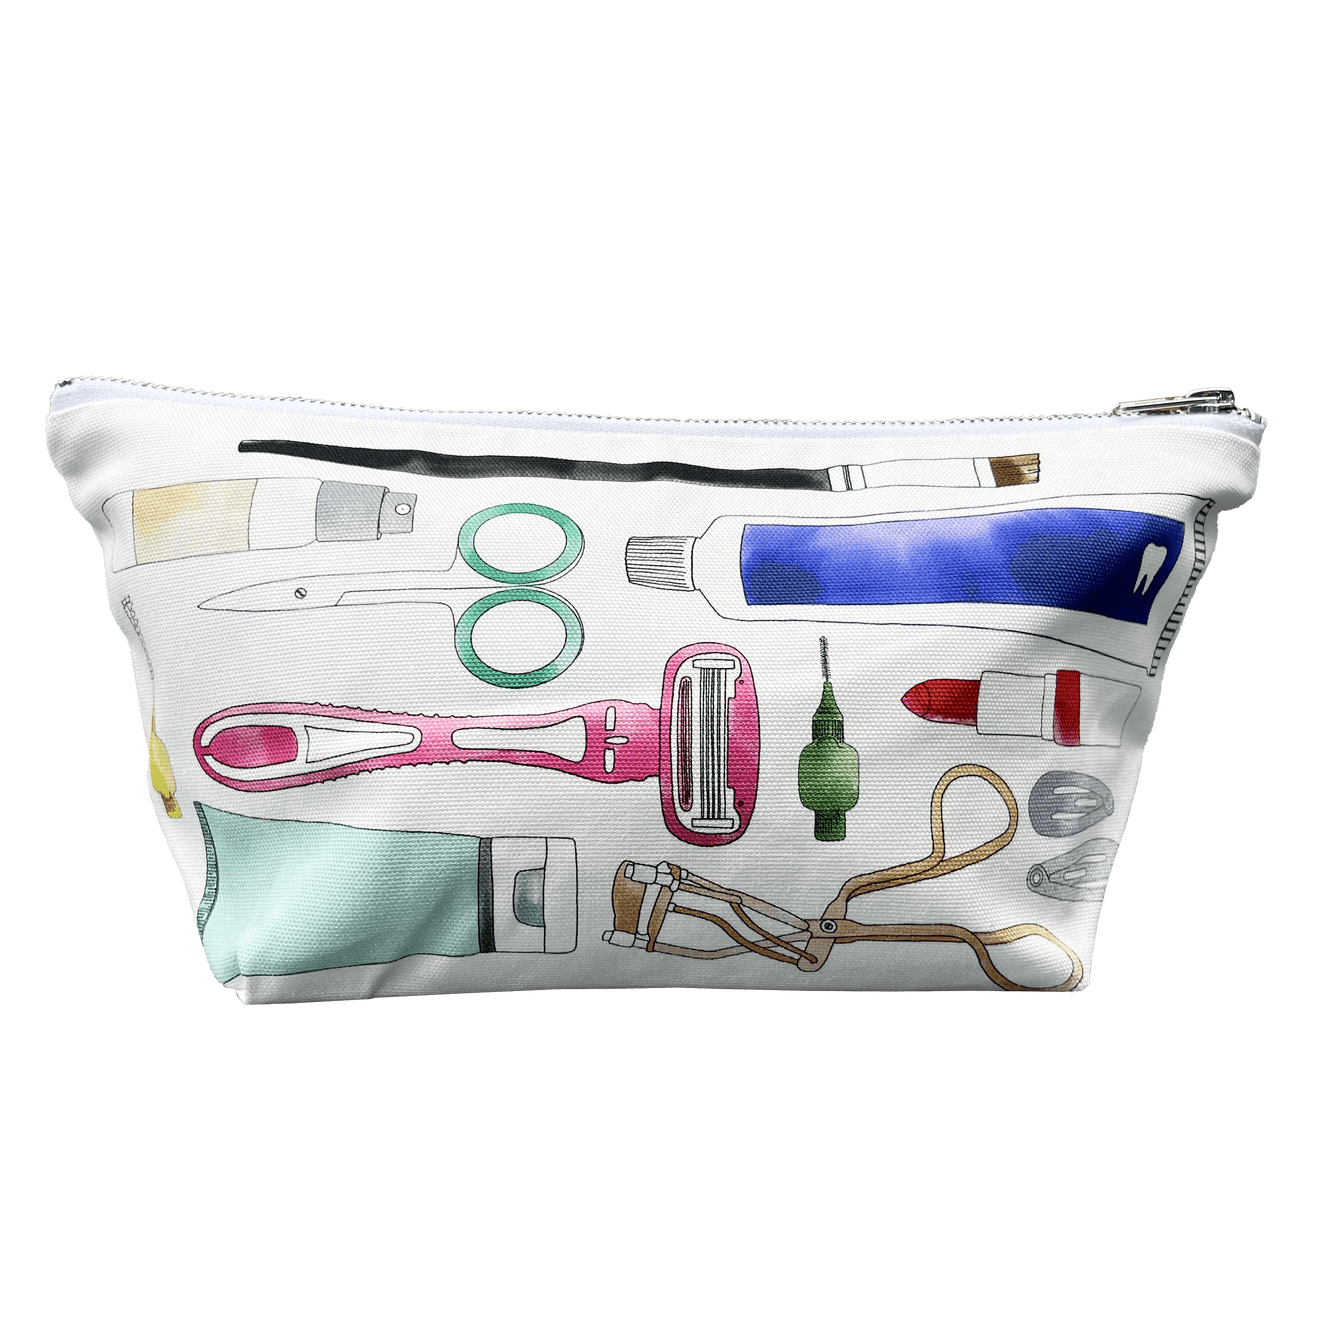 Women's toiletry bag for travel